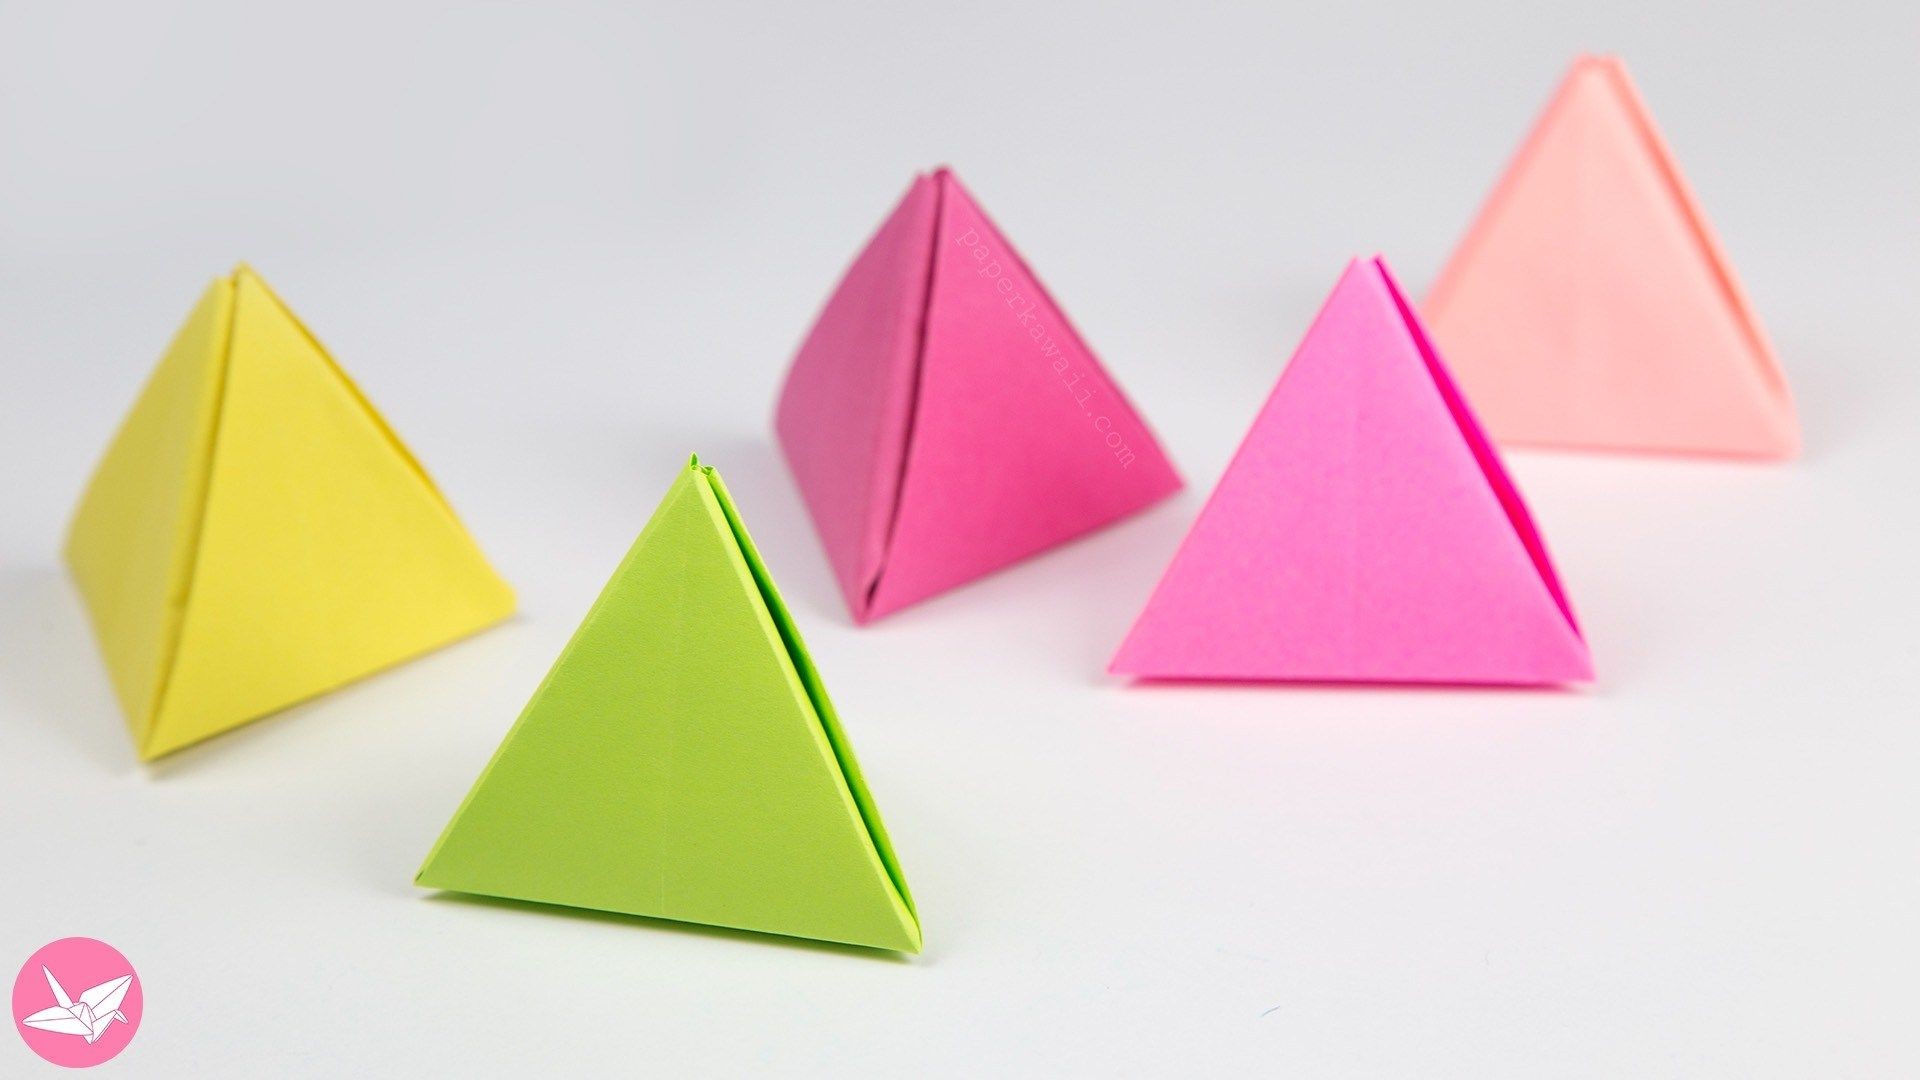 Papercraft Pyramid origami Pyramid Gift Box Pot or Decoration Tutorial